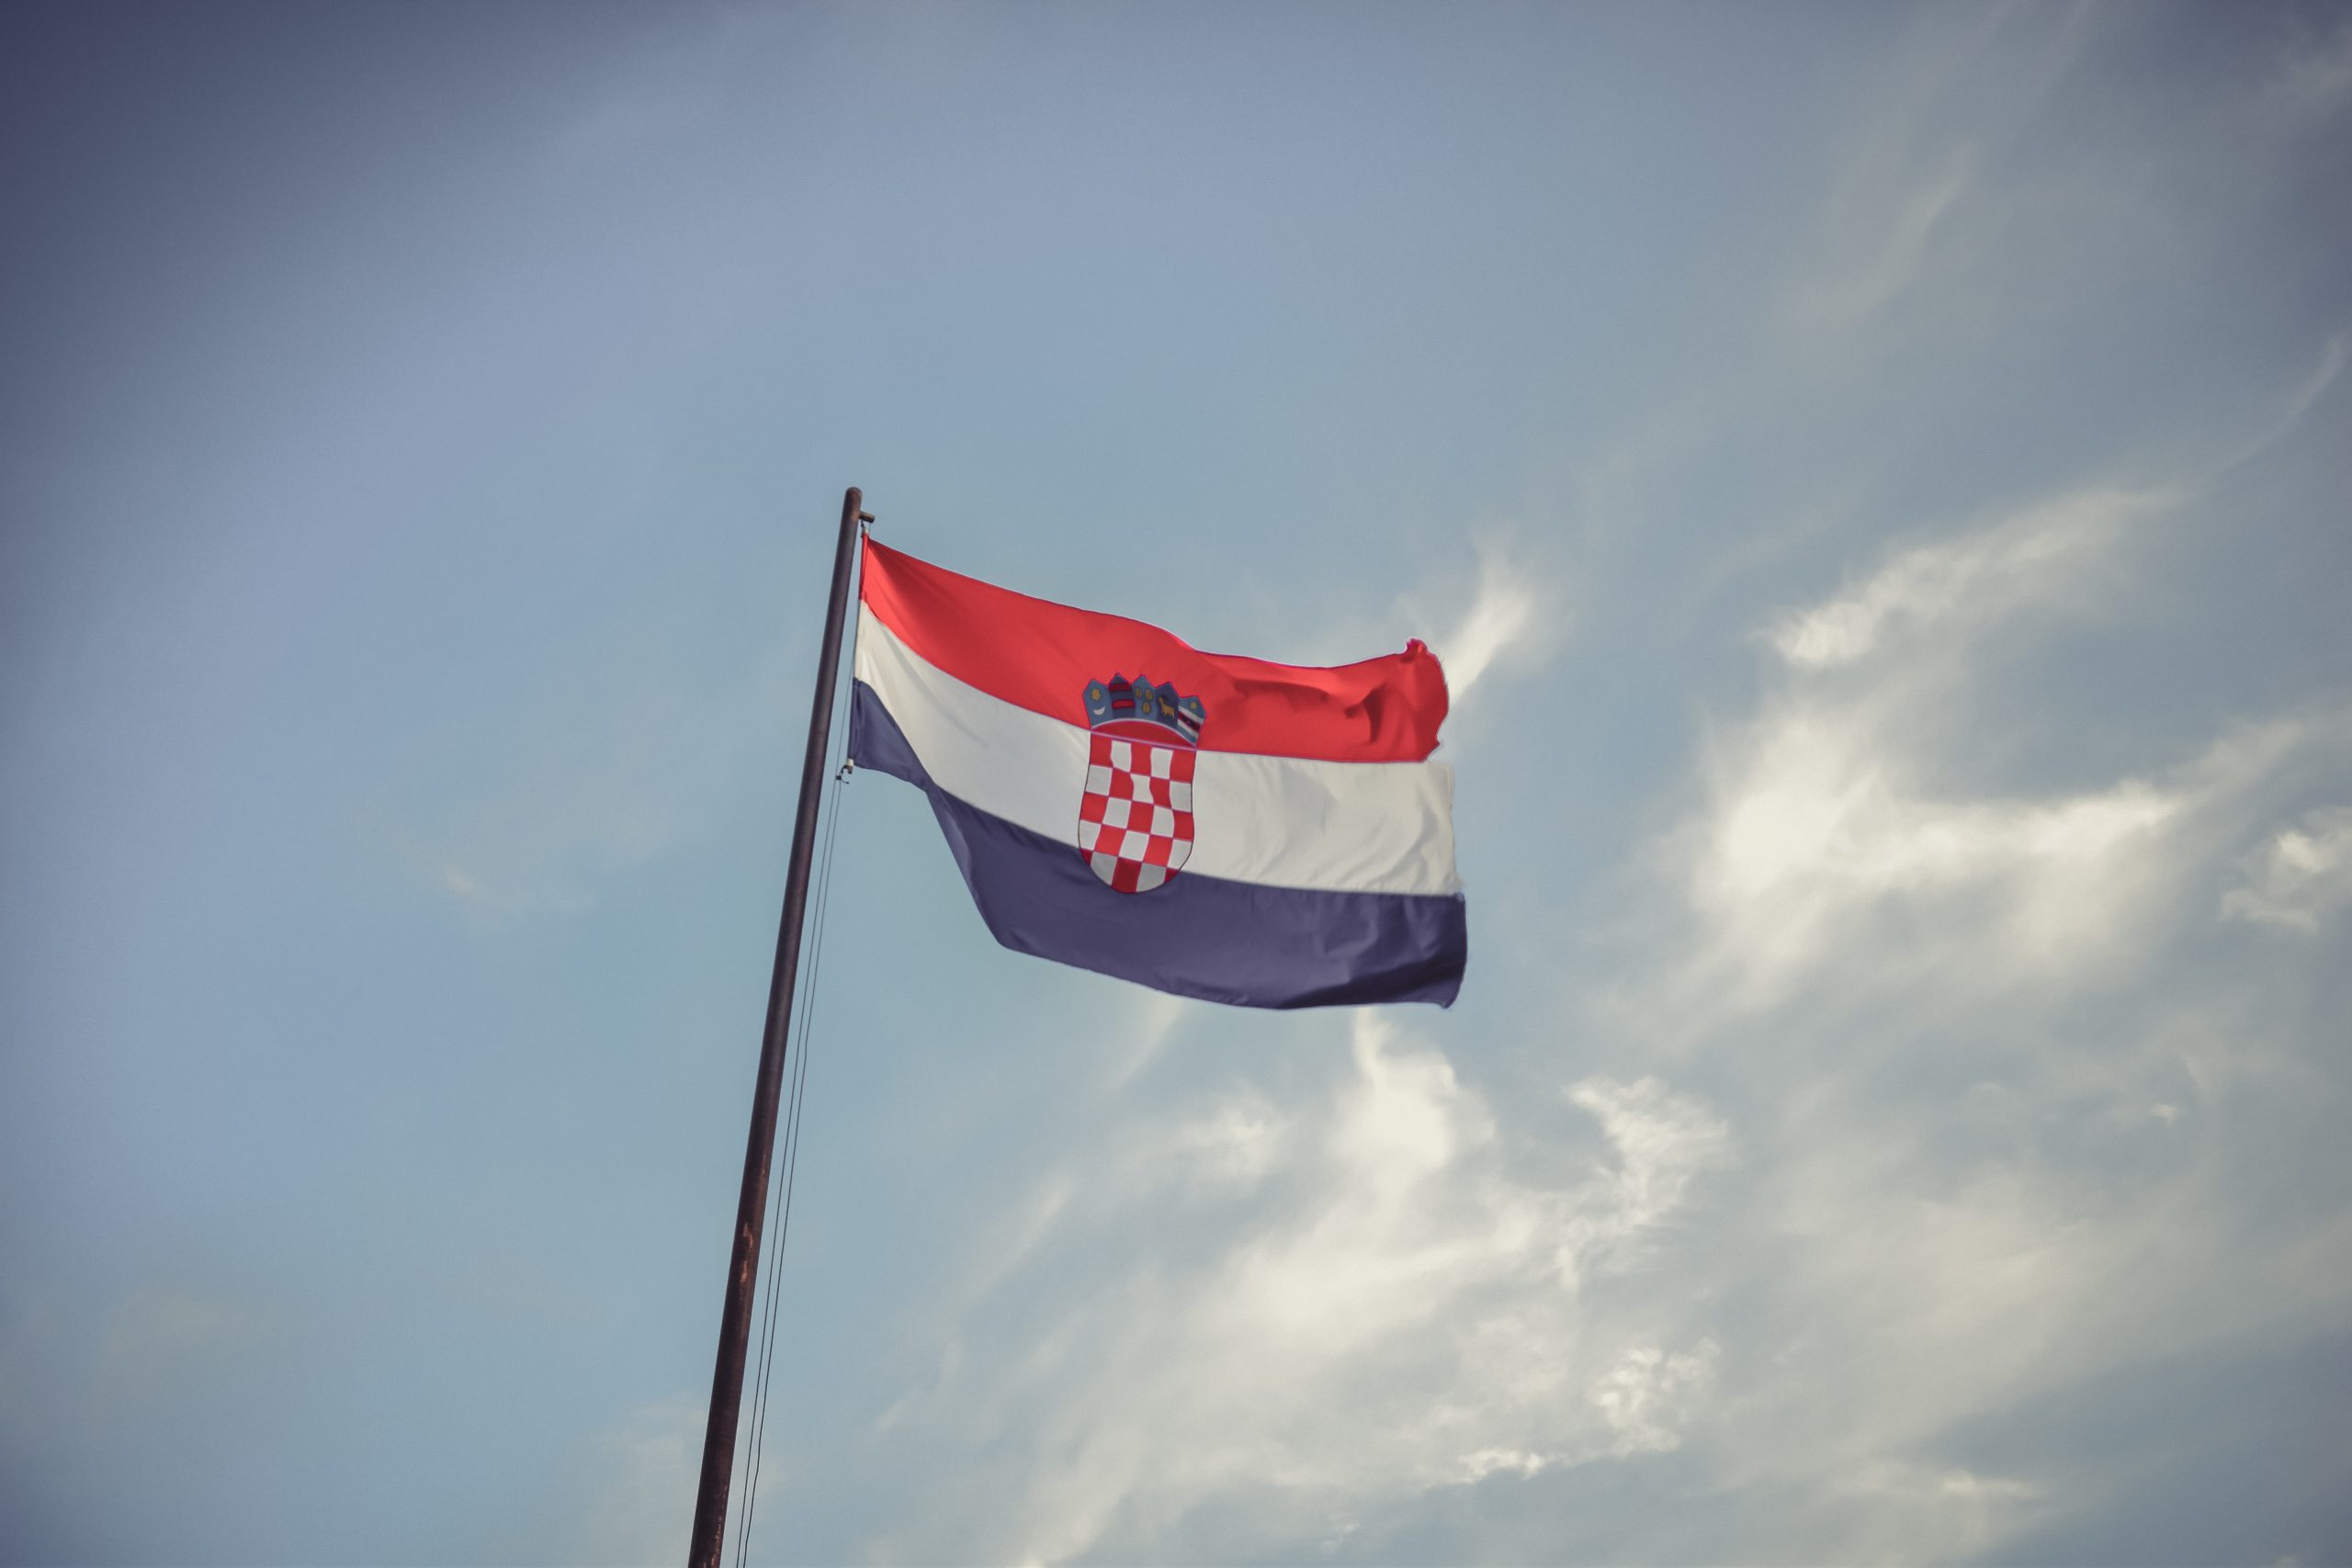 biram hrvatsku: croatian flag